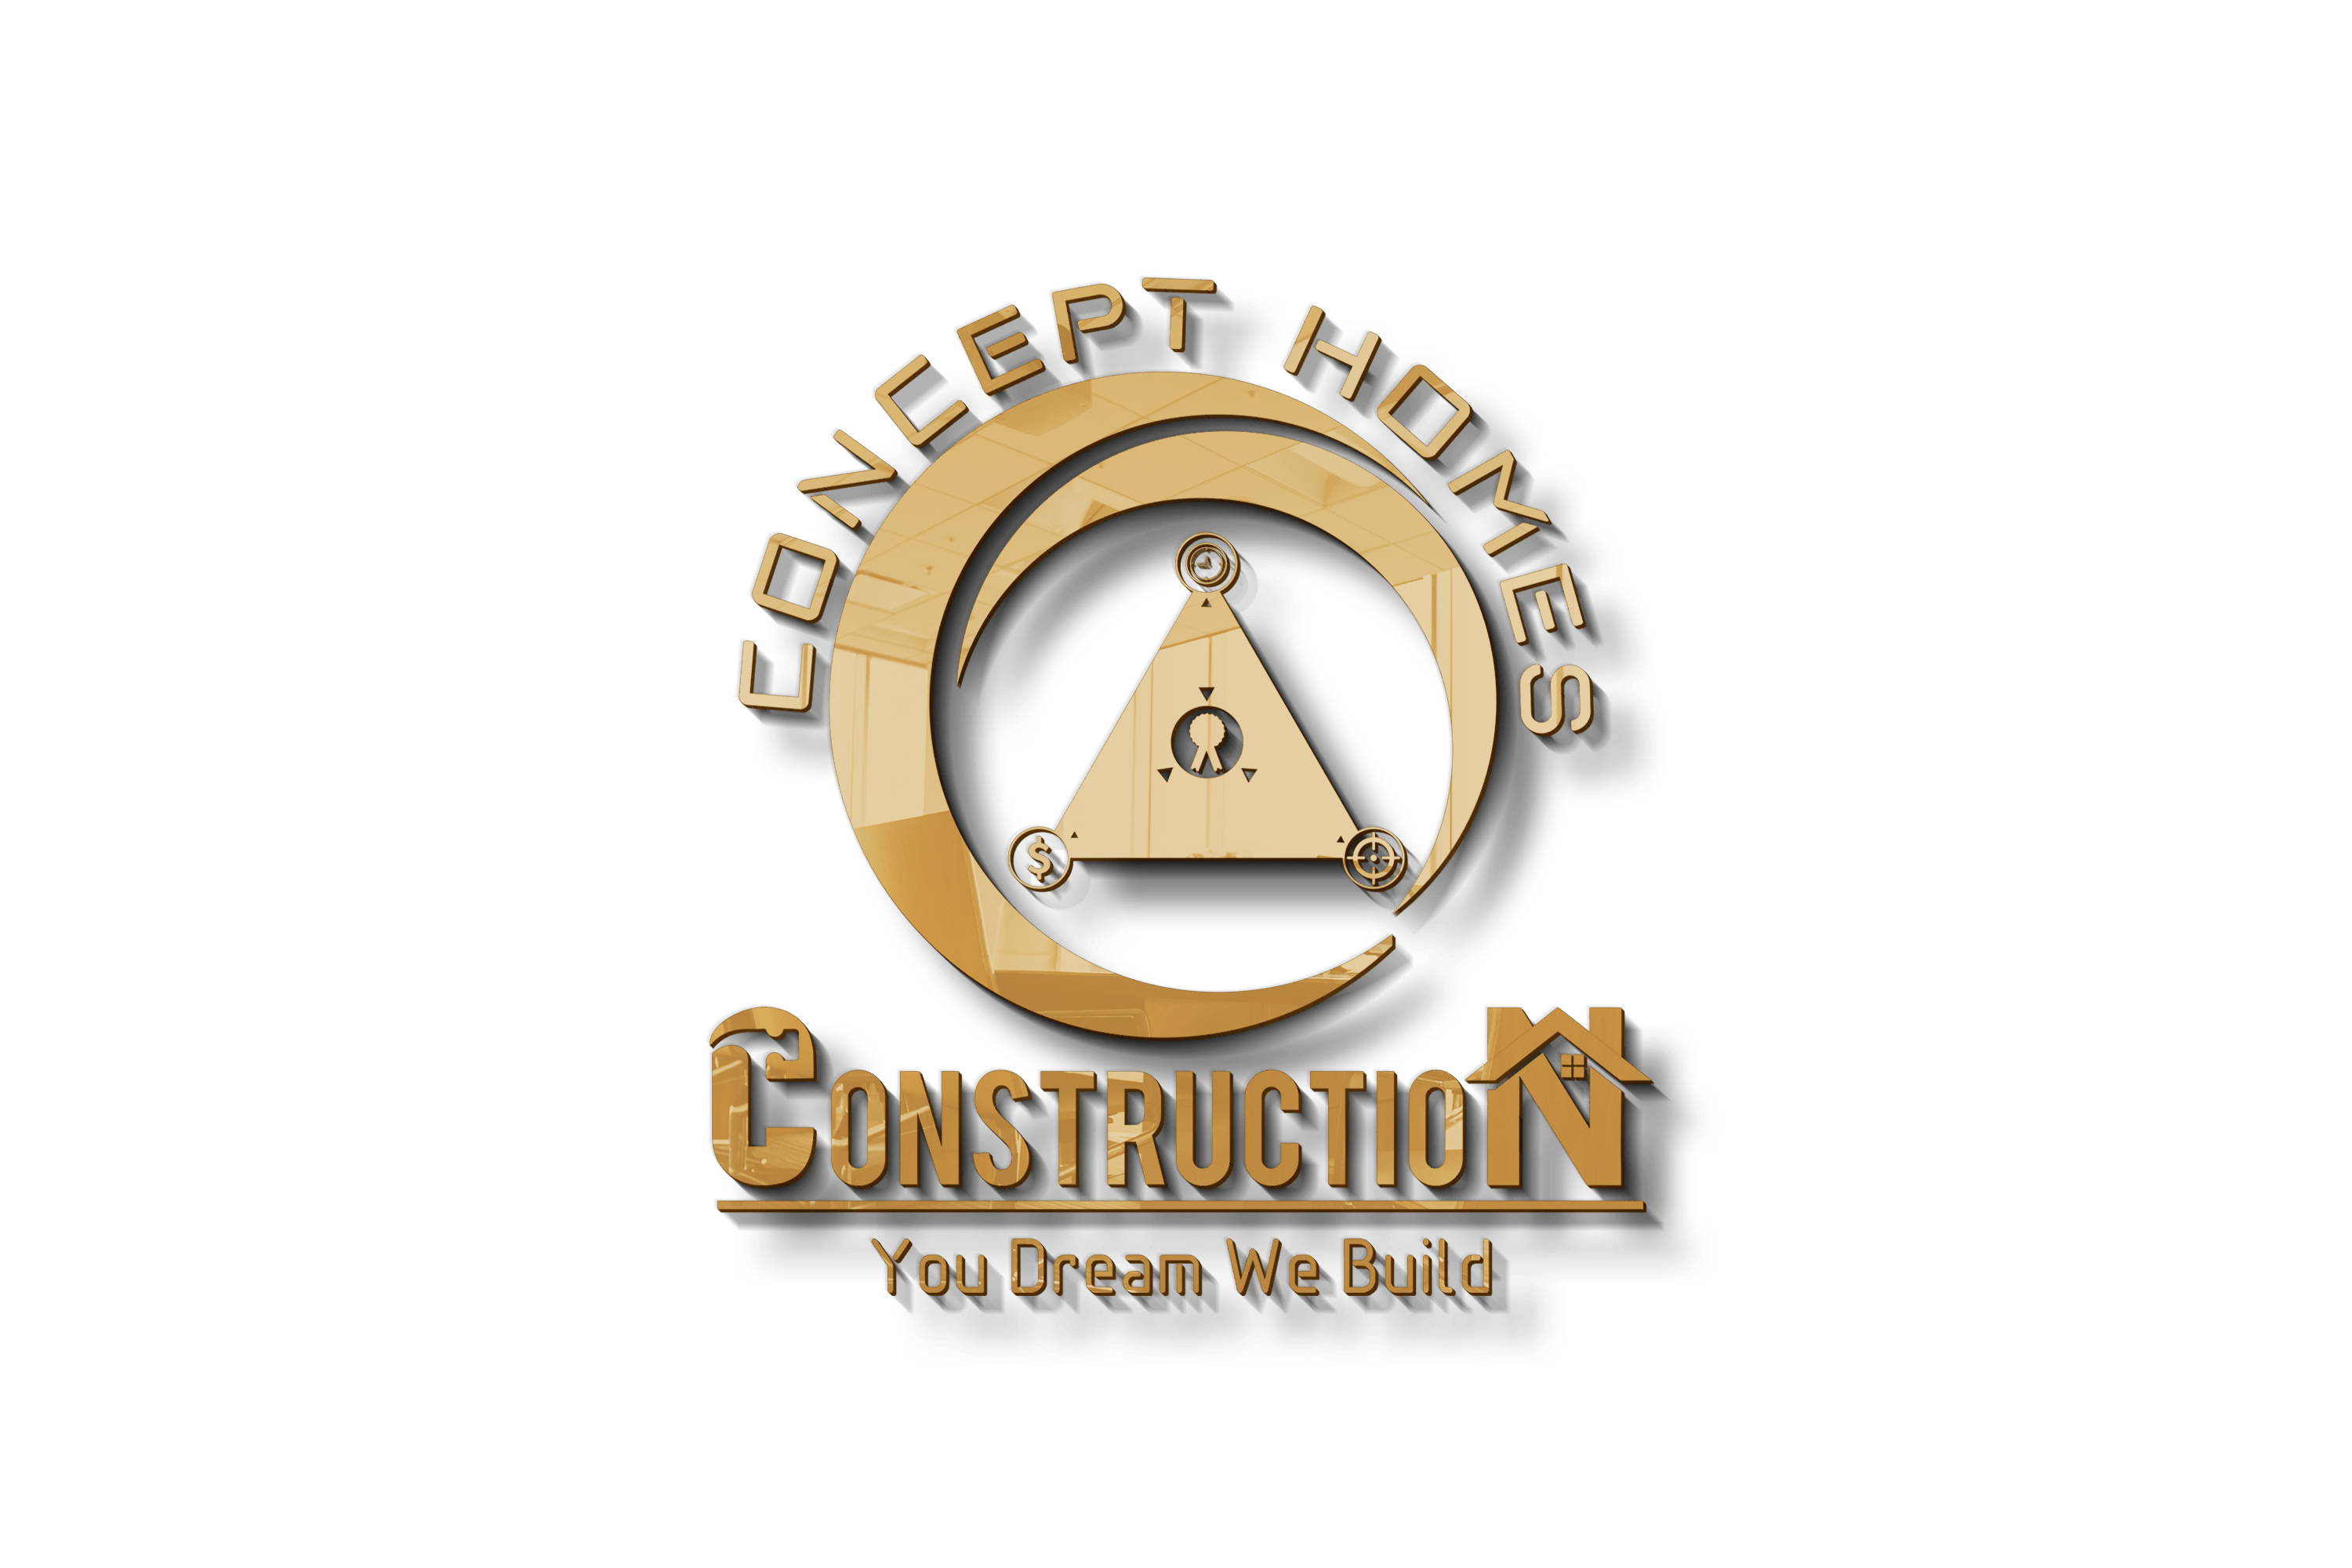 Concept Homes Construction|IT Services|Professional Services